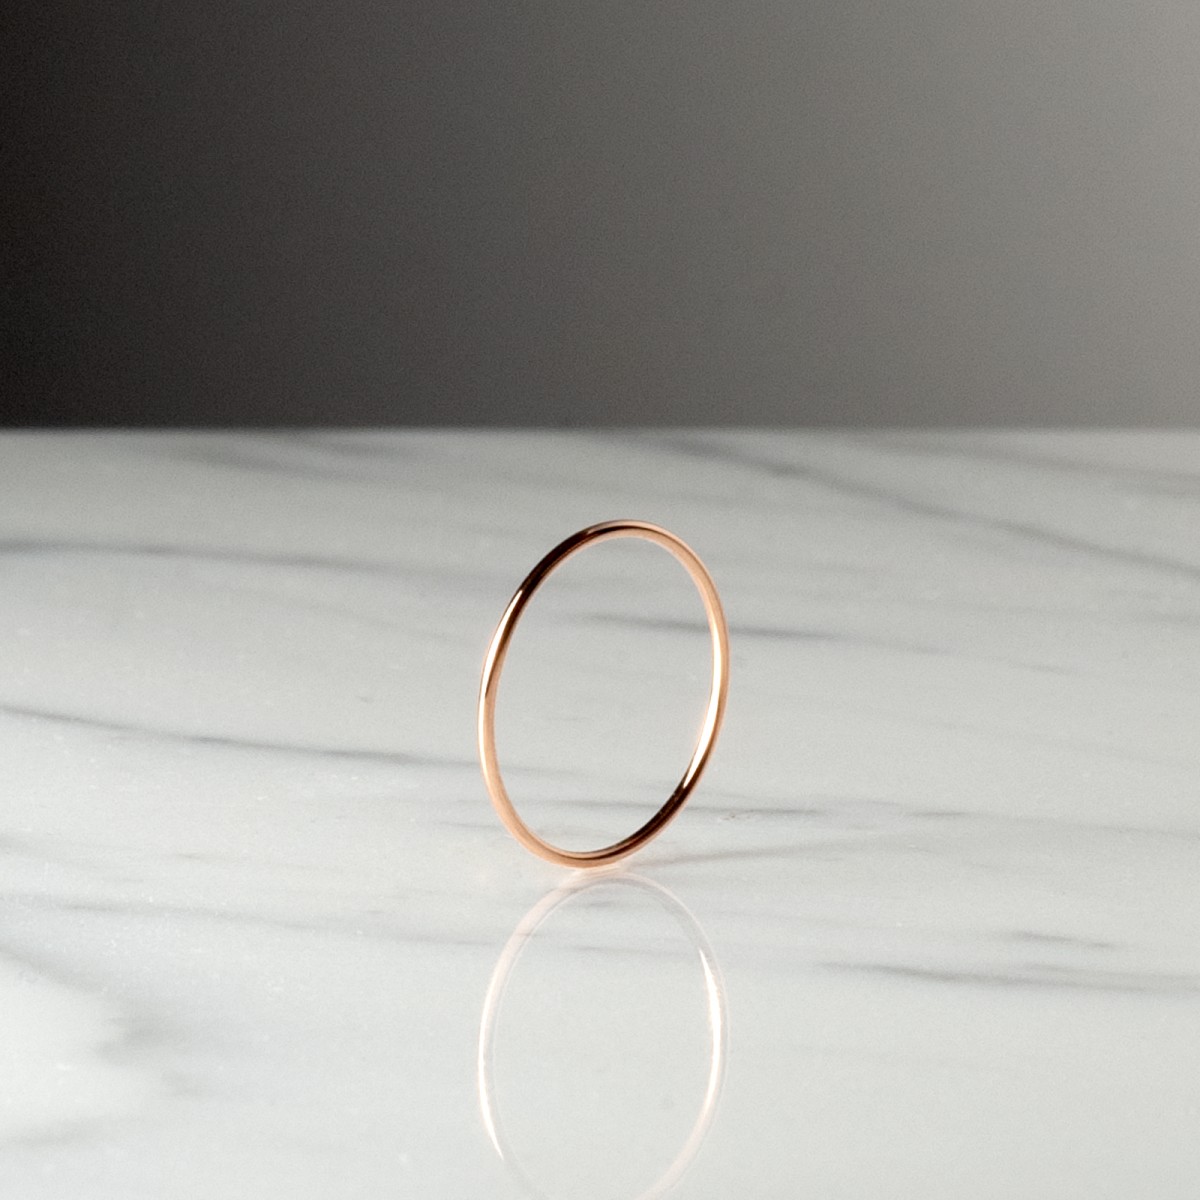 ROND 1MM 2059 - Wedding ring handmade in France